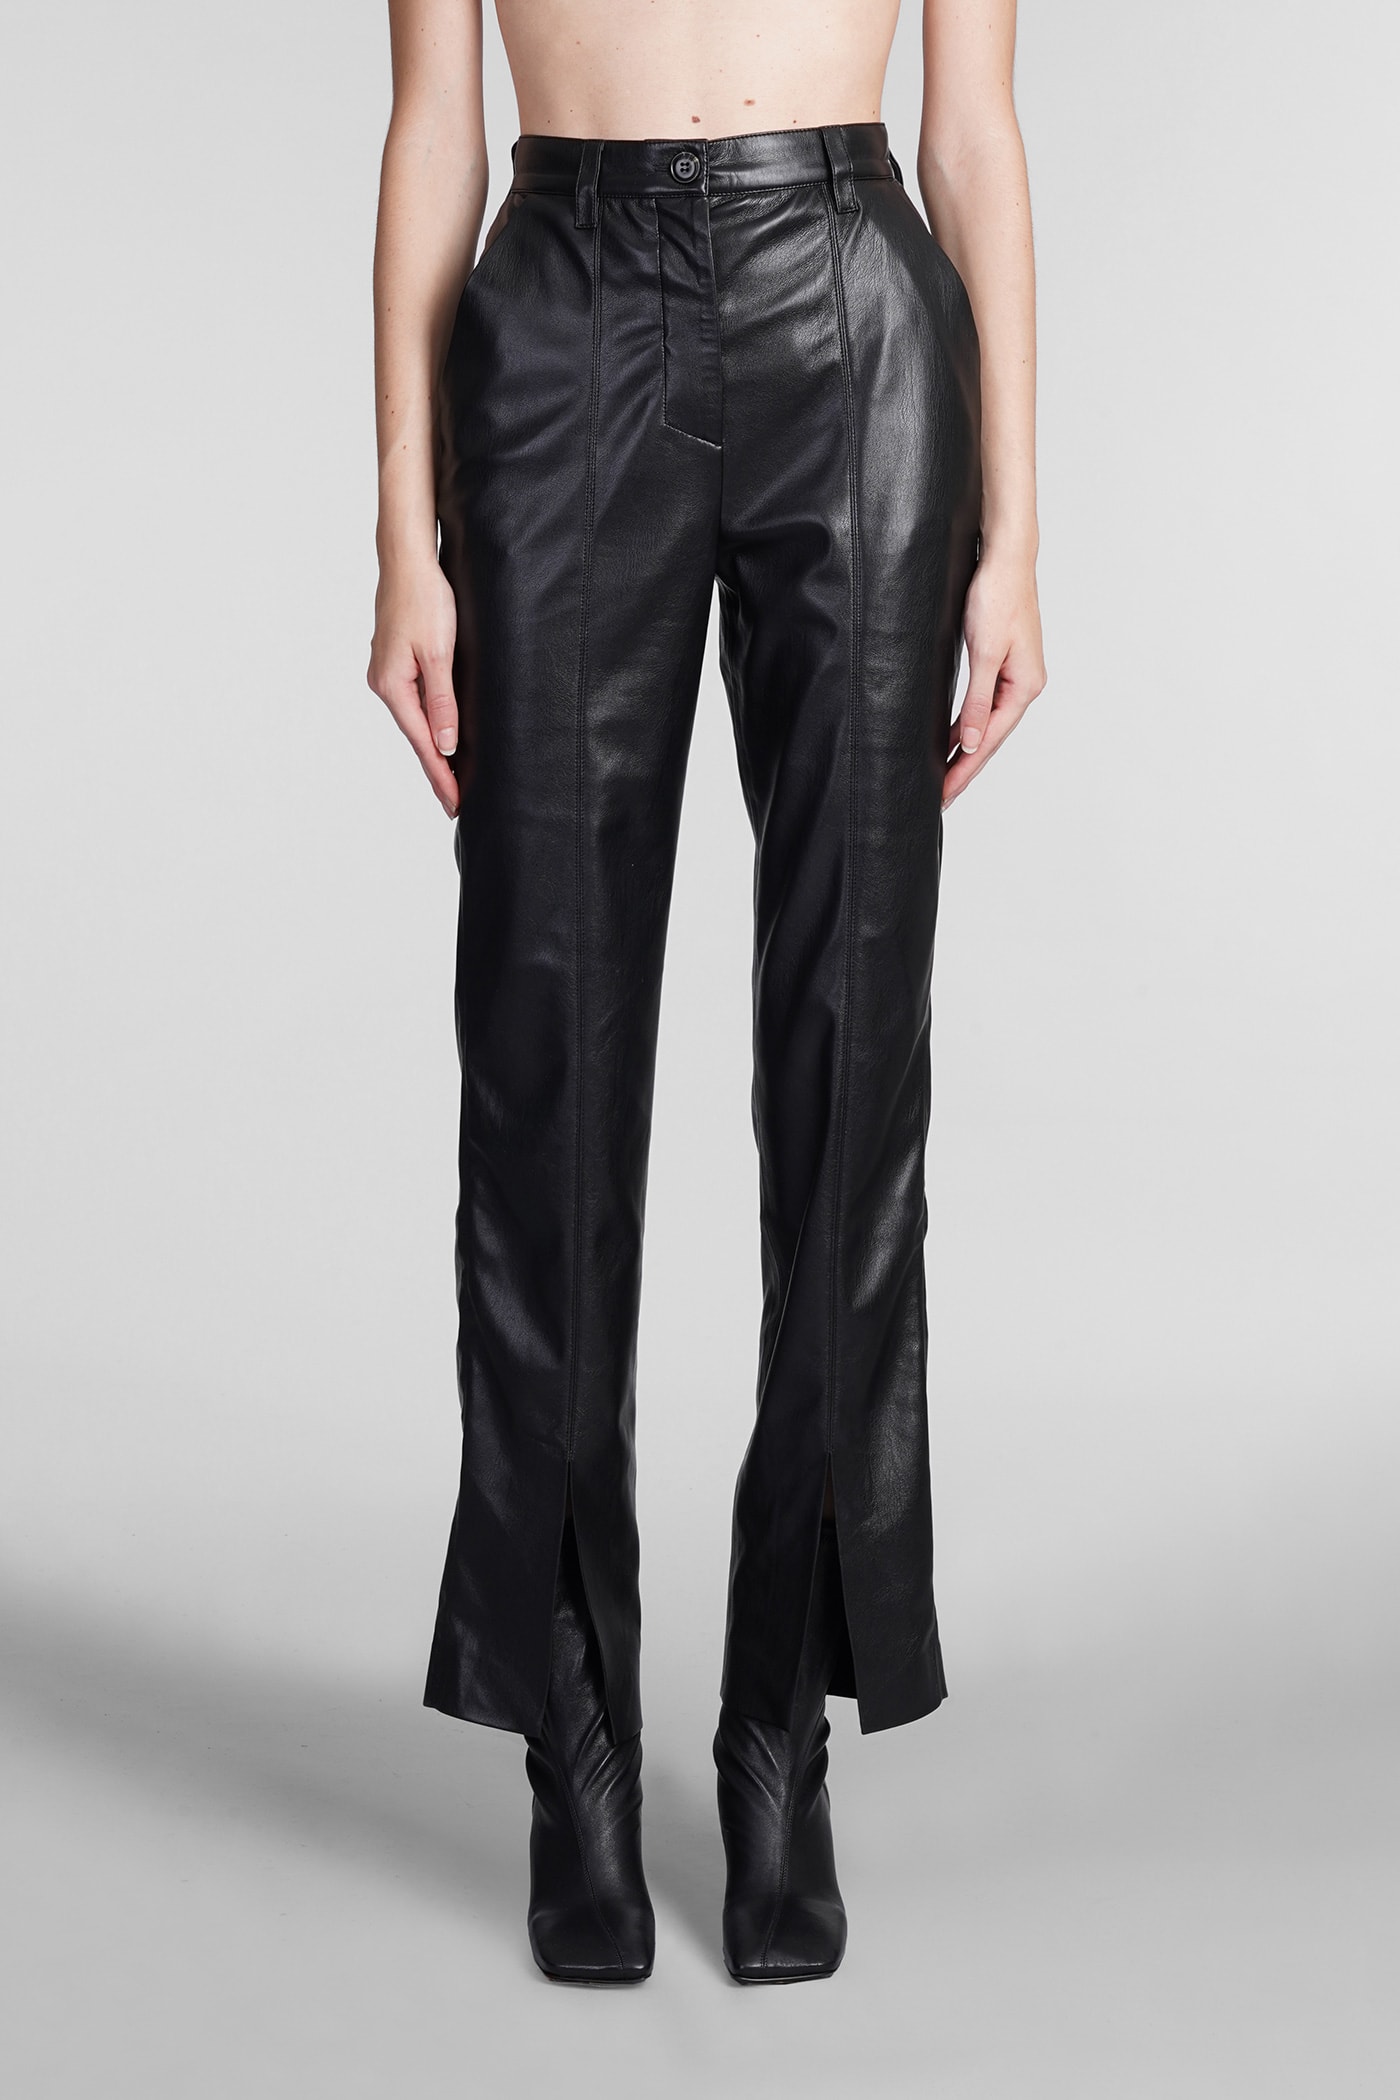 Nanushka Masa Pants In Black Synthetic Leather